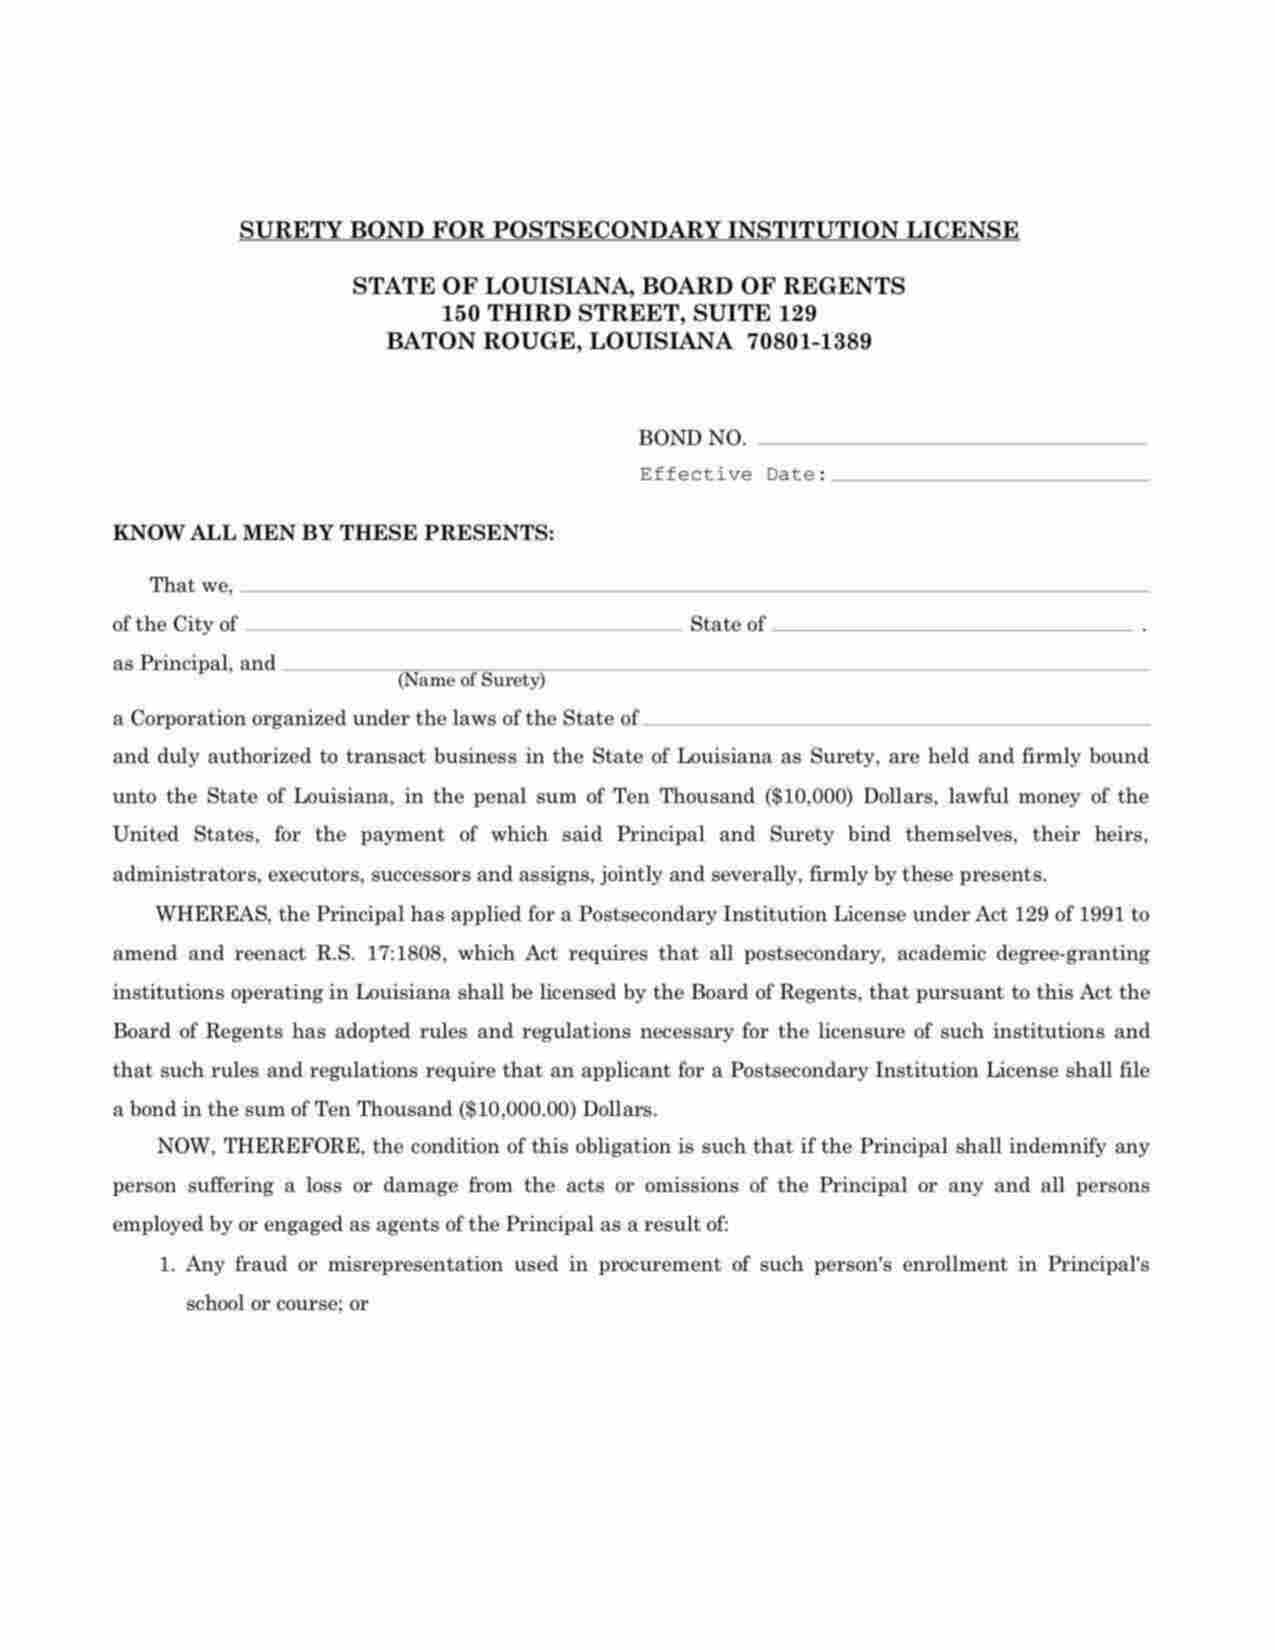 Louisiana Postsecondary Institution License Bond Form